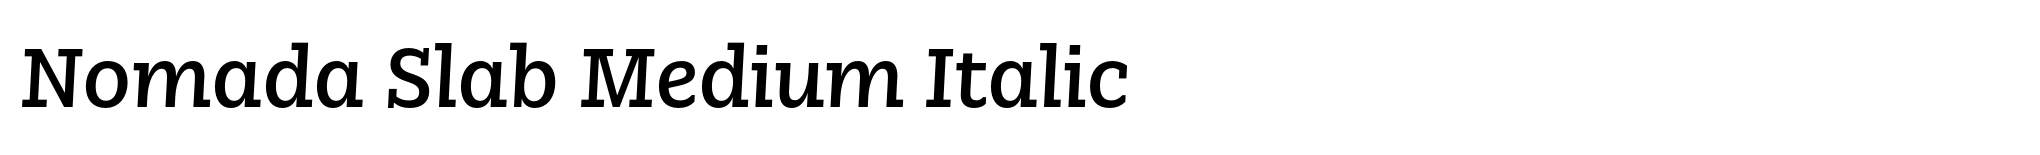 Nomada Slab Medium Italic image